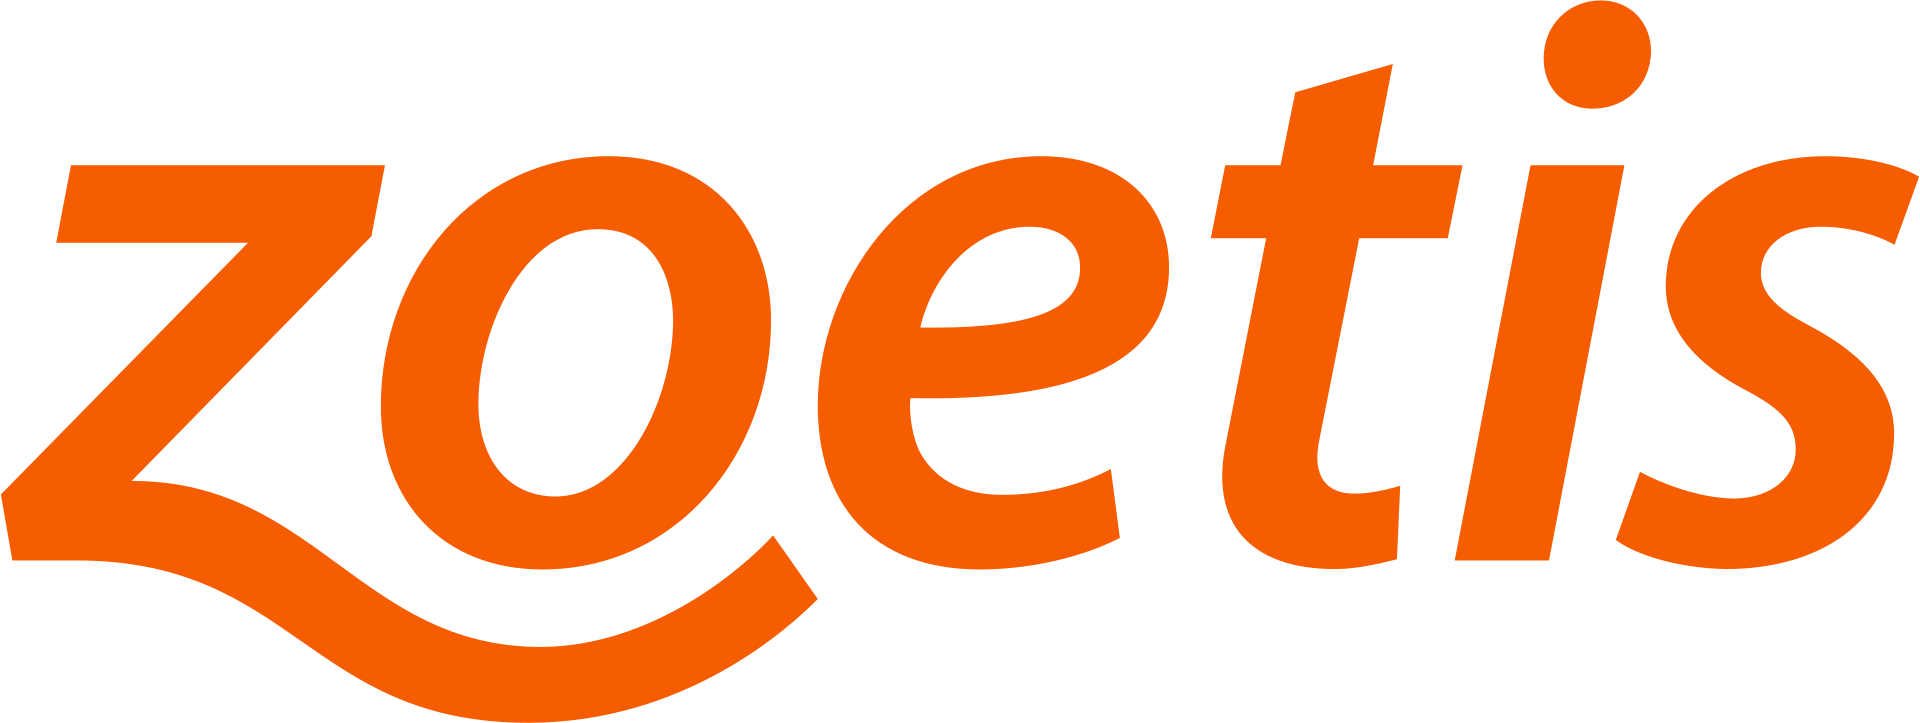 the zoetis logo